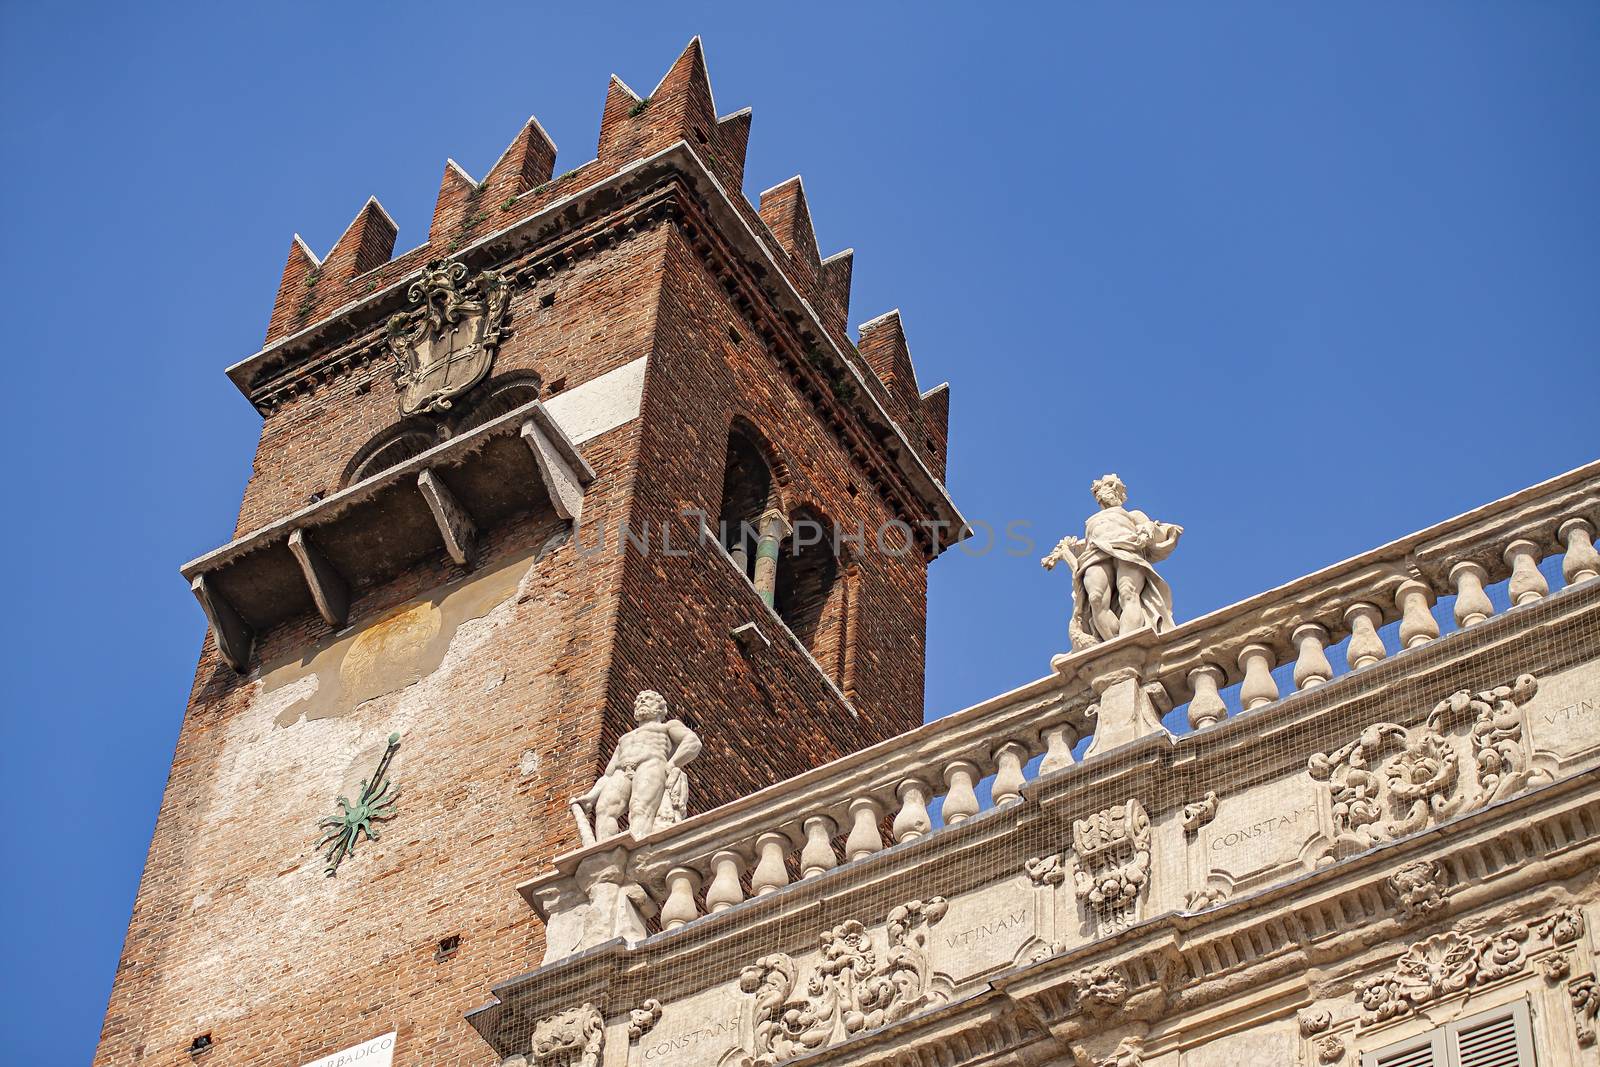 Verona castle tower detail in Piazza delle Erbe, Erbe sqaure in english